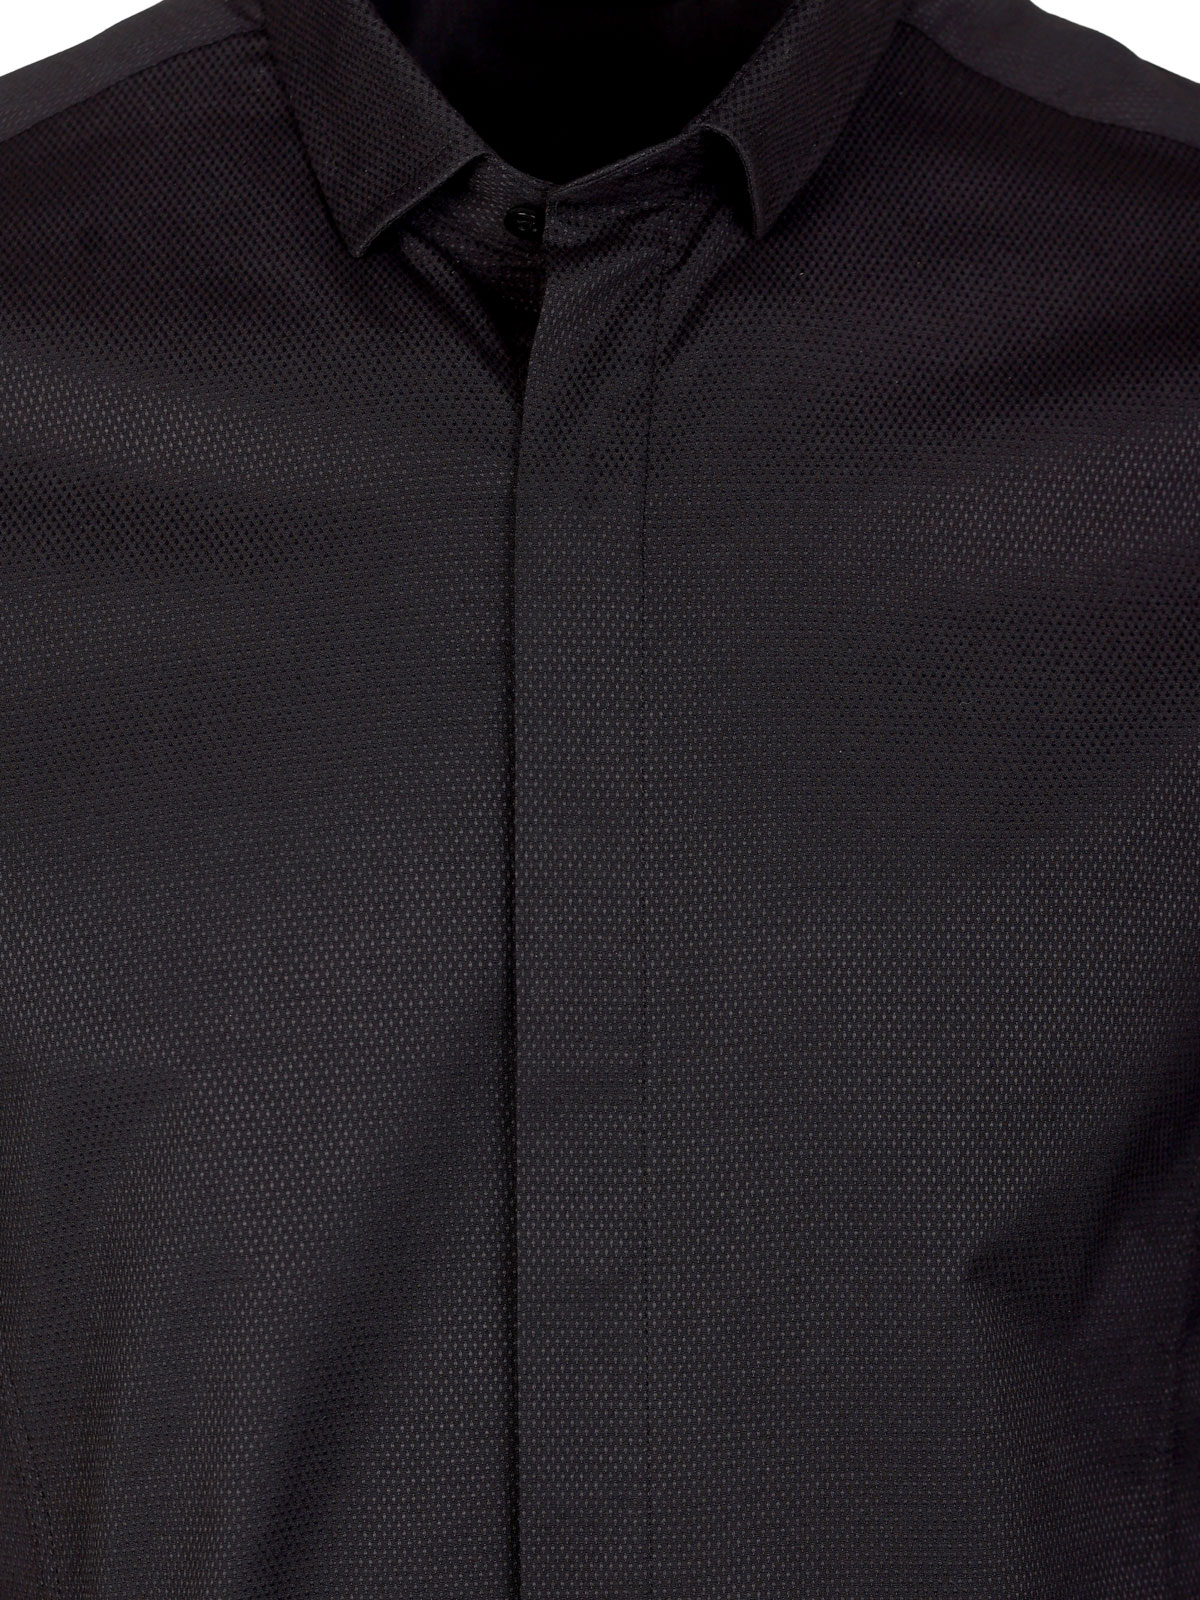 Mens shirt in black color - 21609 € 48.37 img3